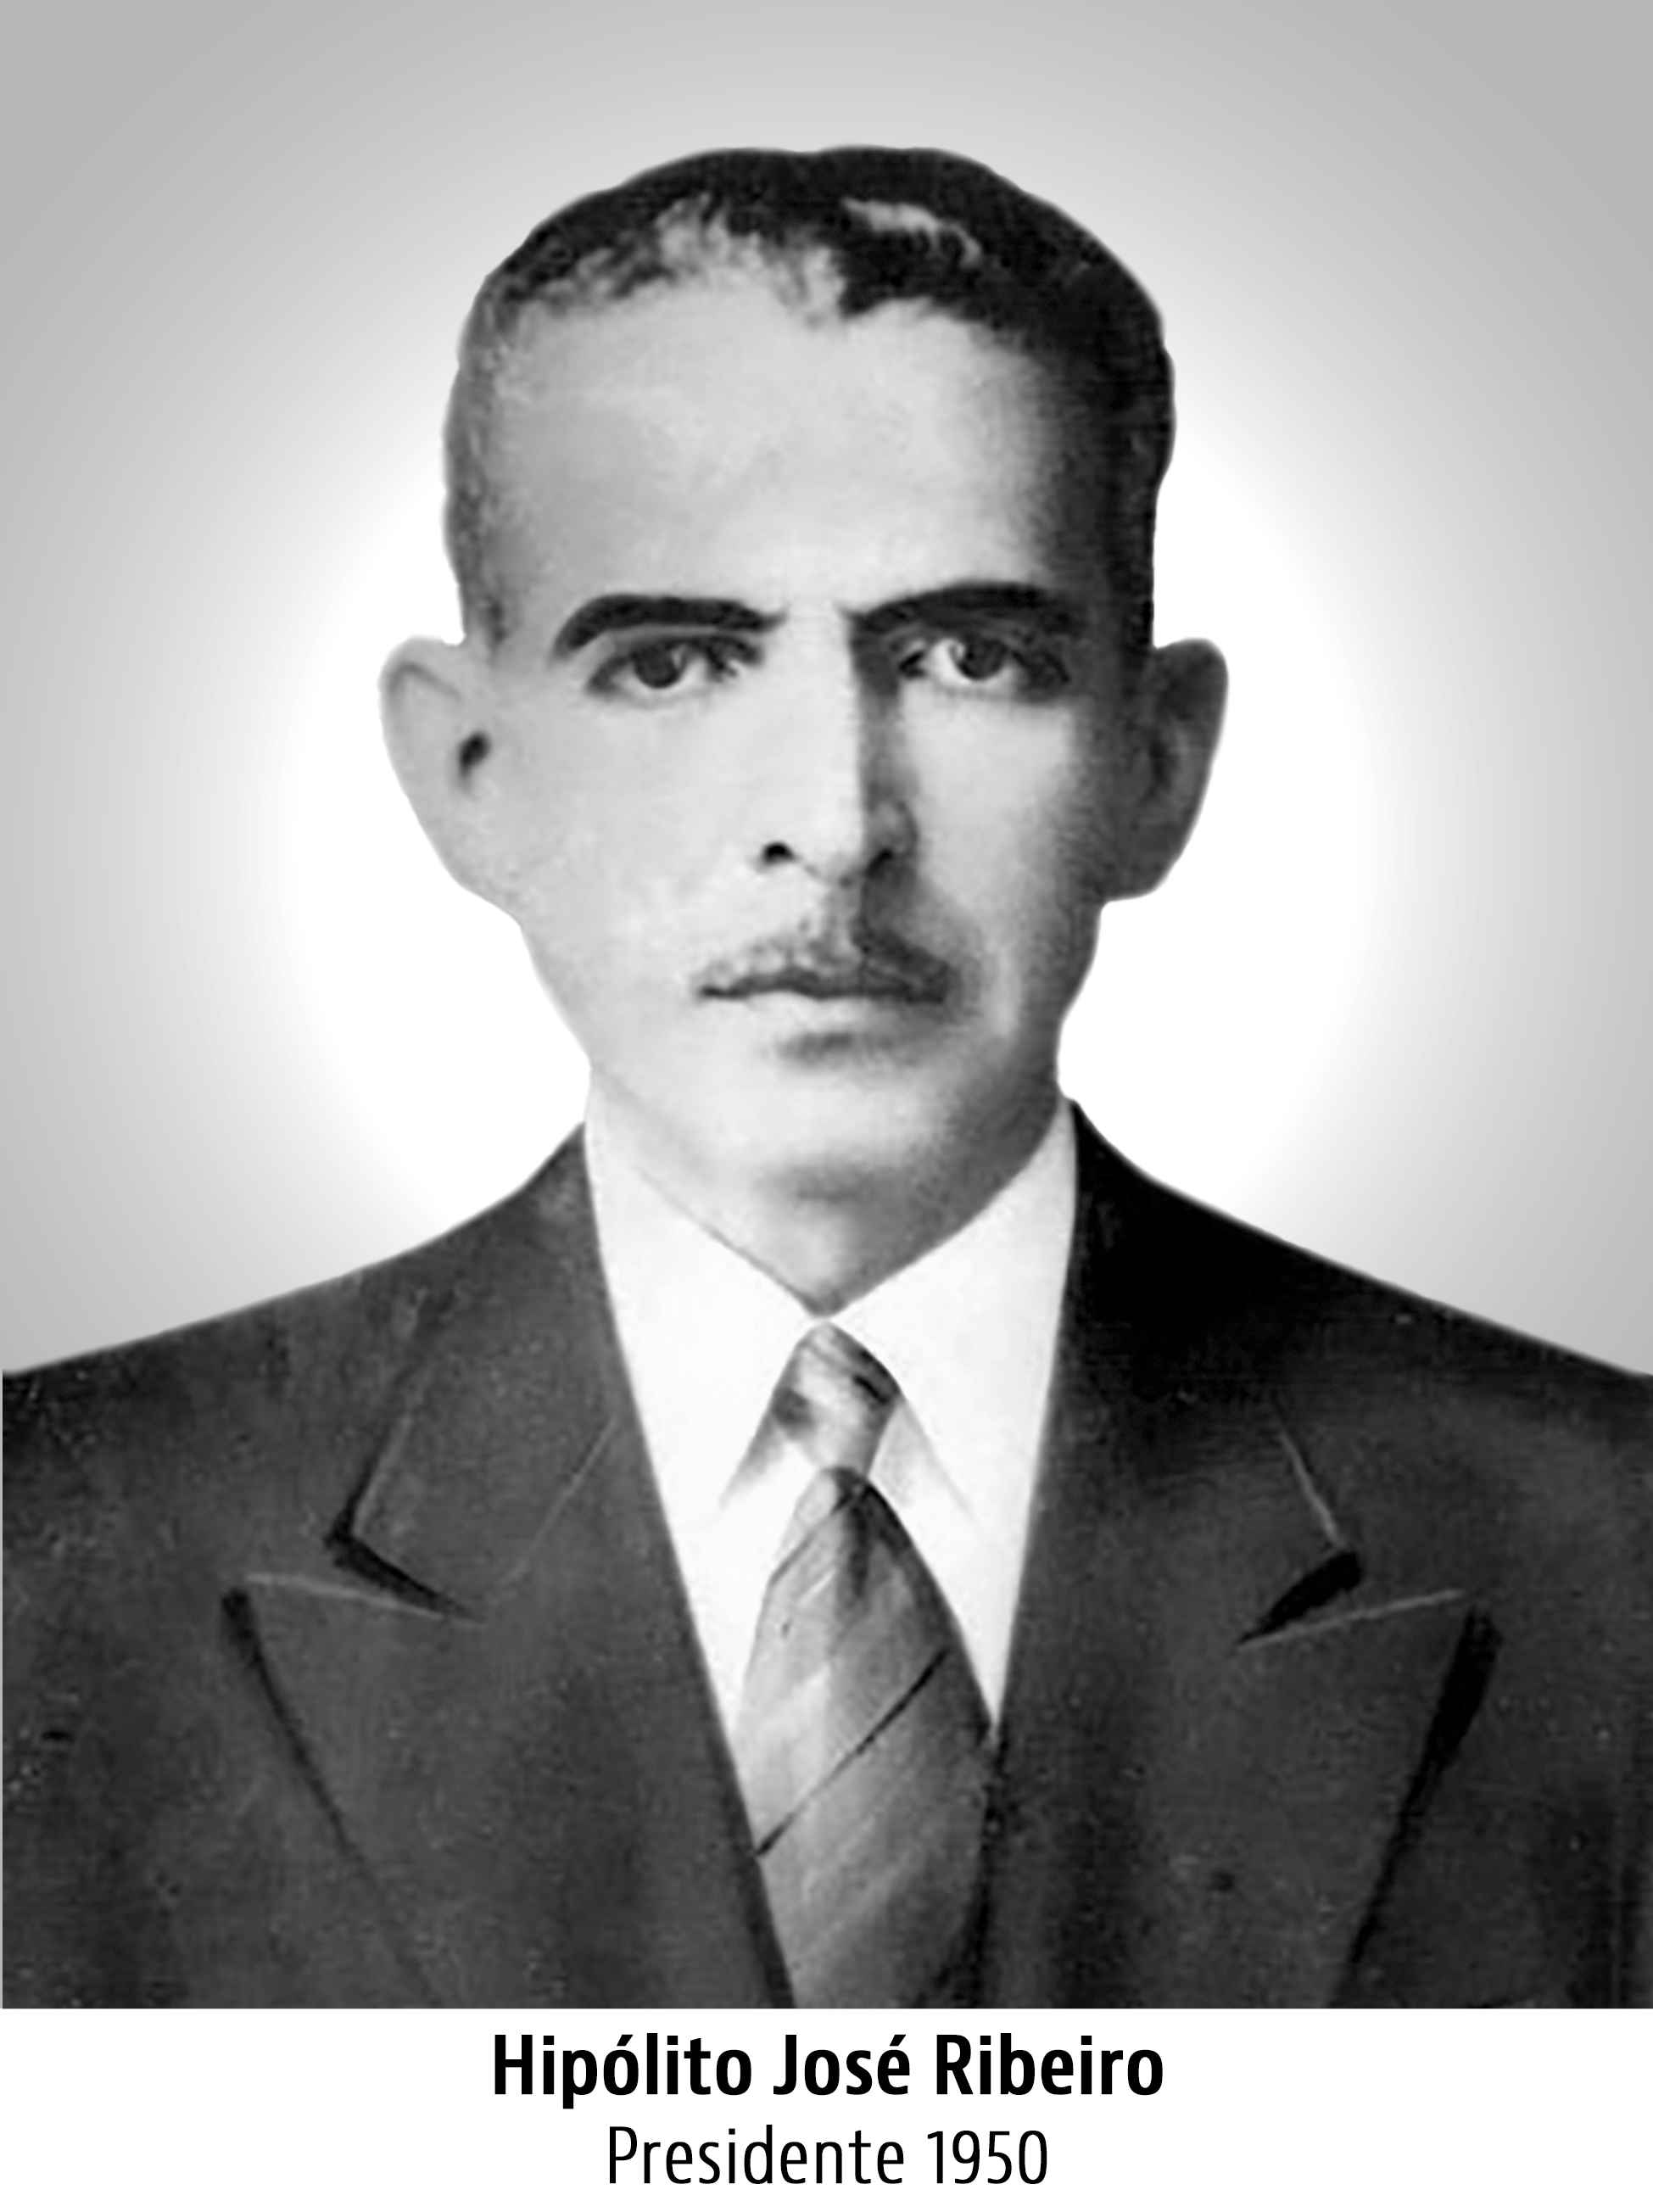 Hipólito José Ribeiro